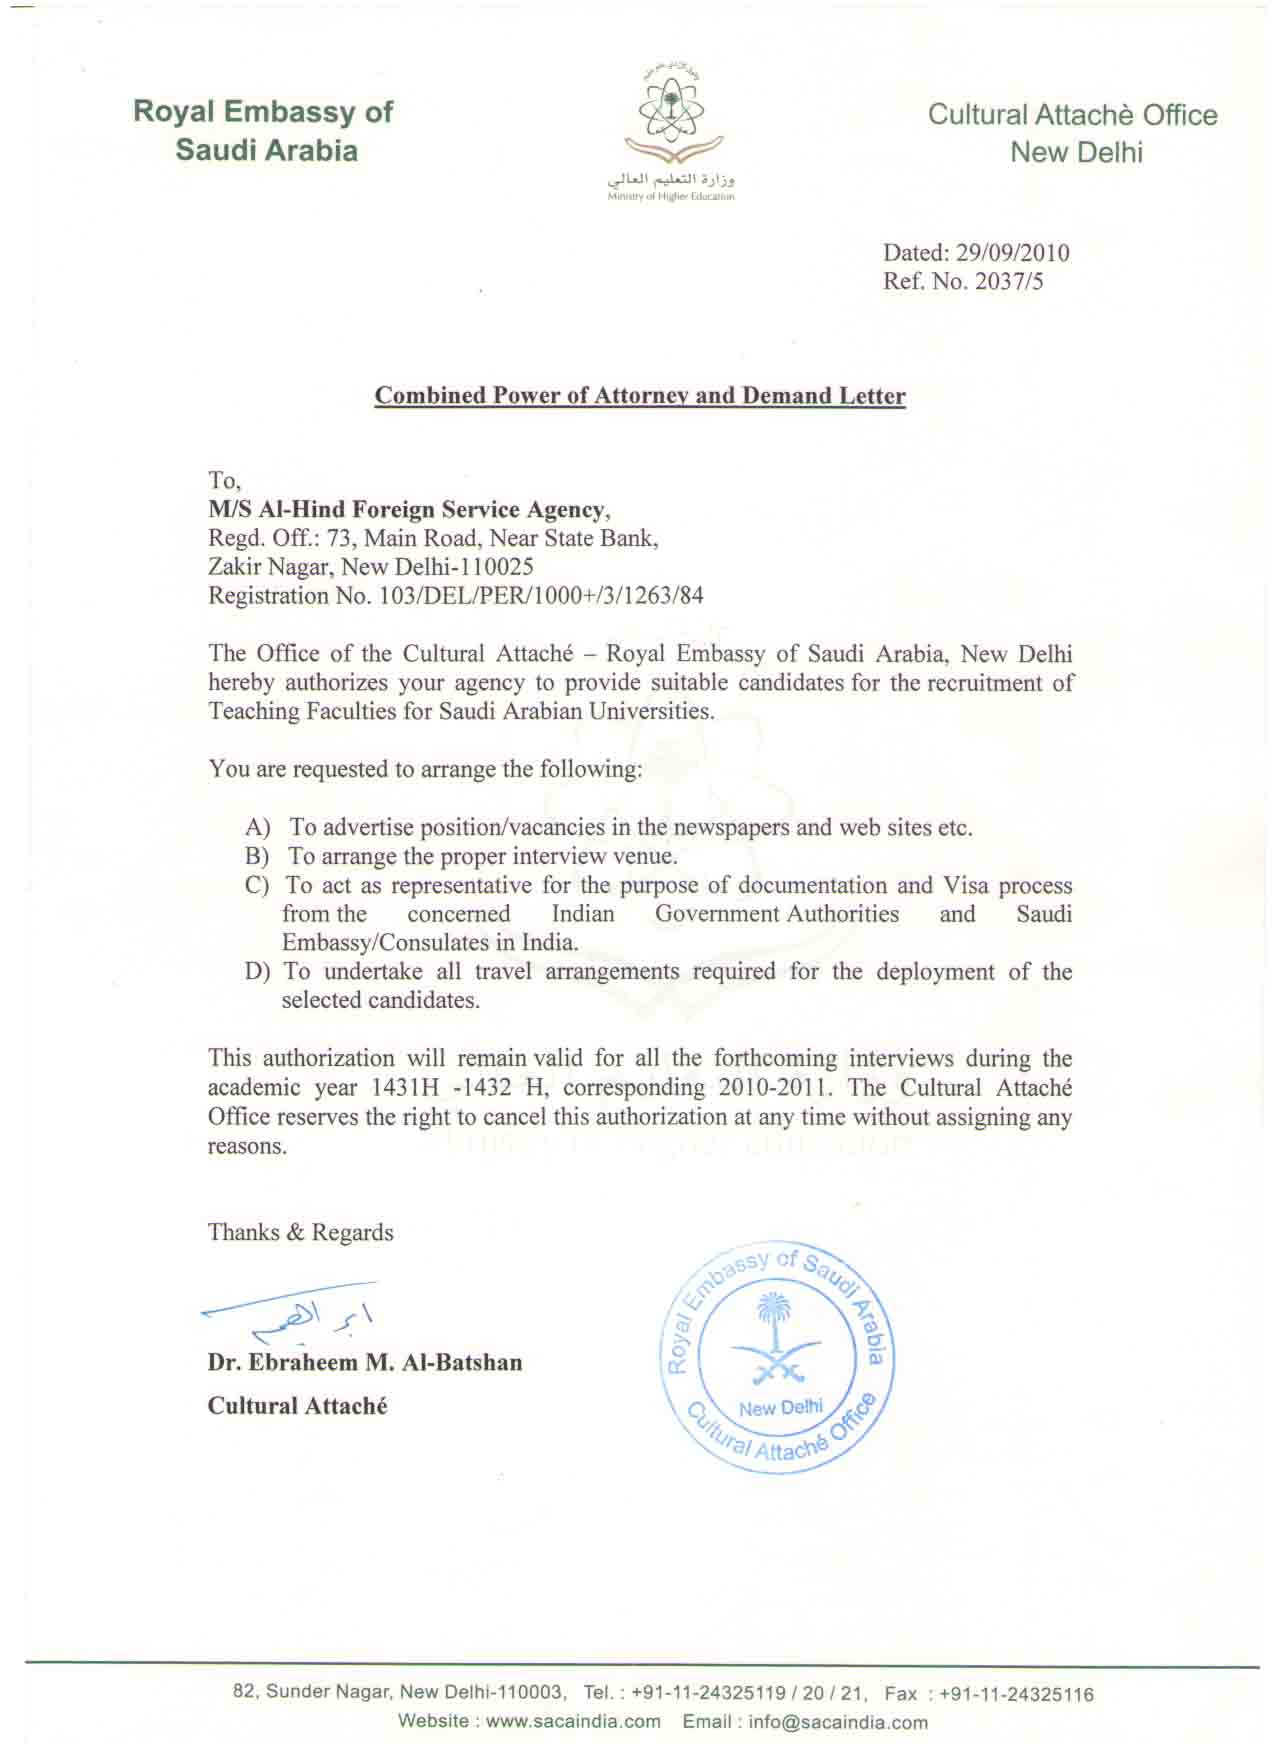 Certification by the Saudi Cultural Attache 2010